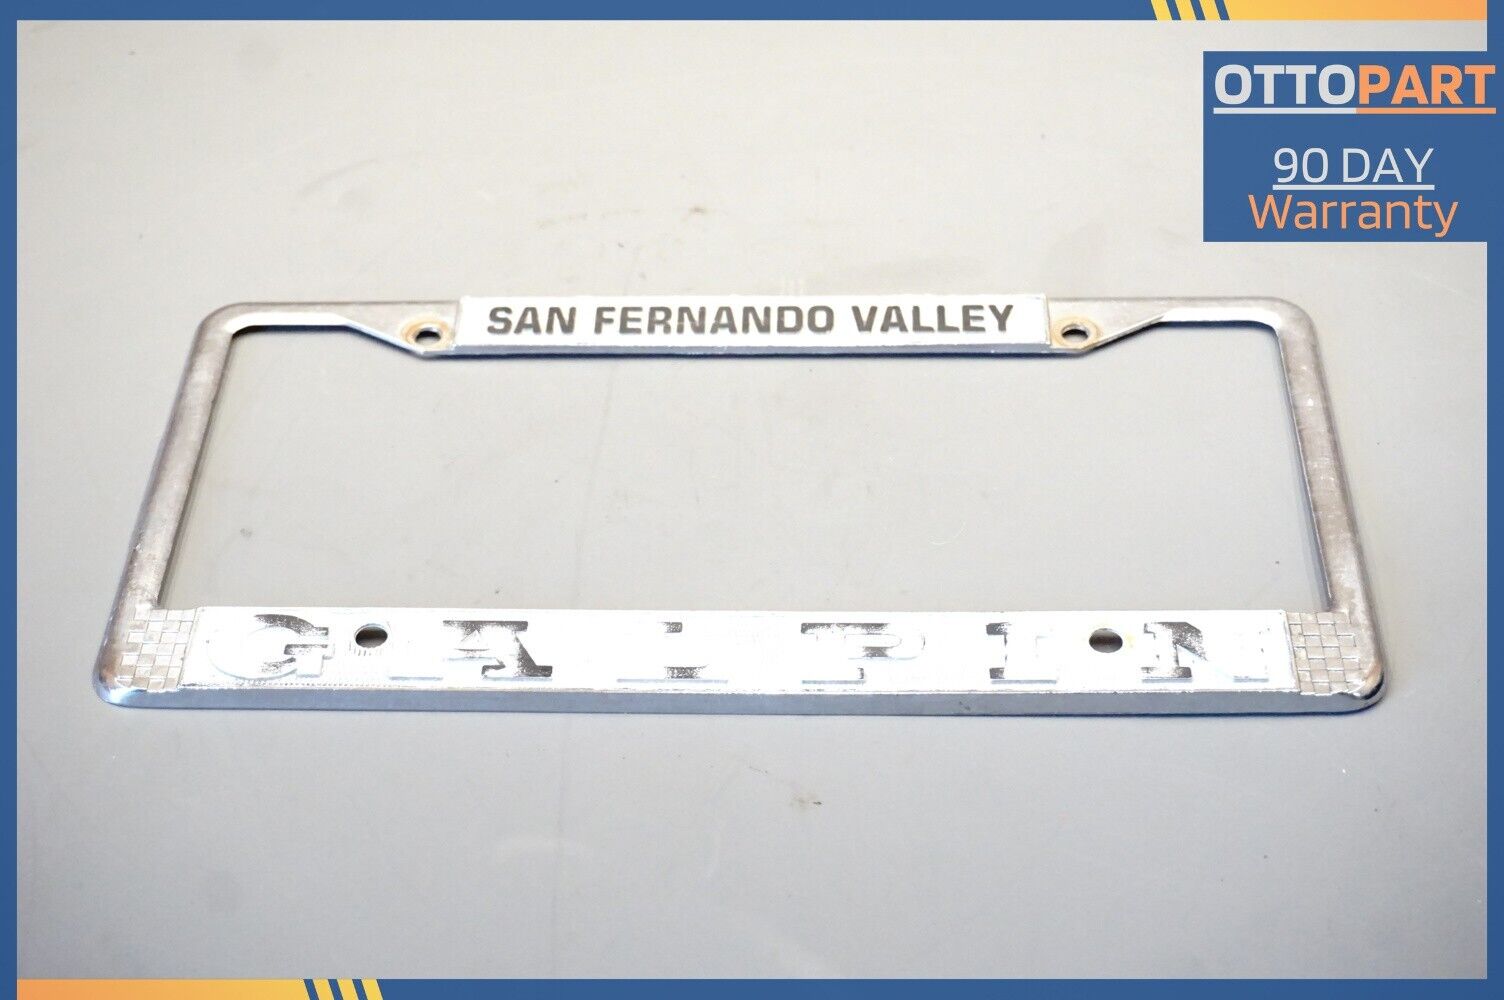 1994 JAGUAR XJS 2+2 Galpin San Fernando Valley Metal License Plate Frame